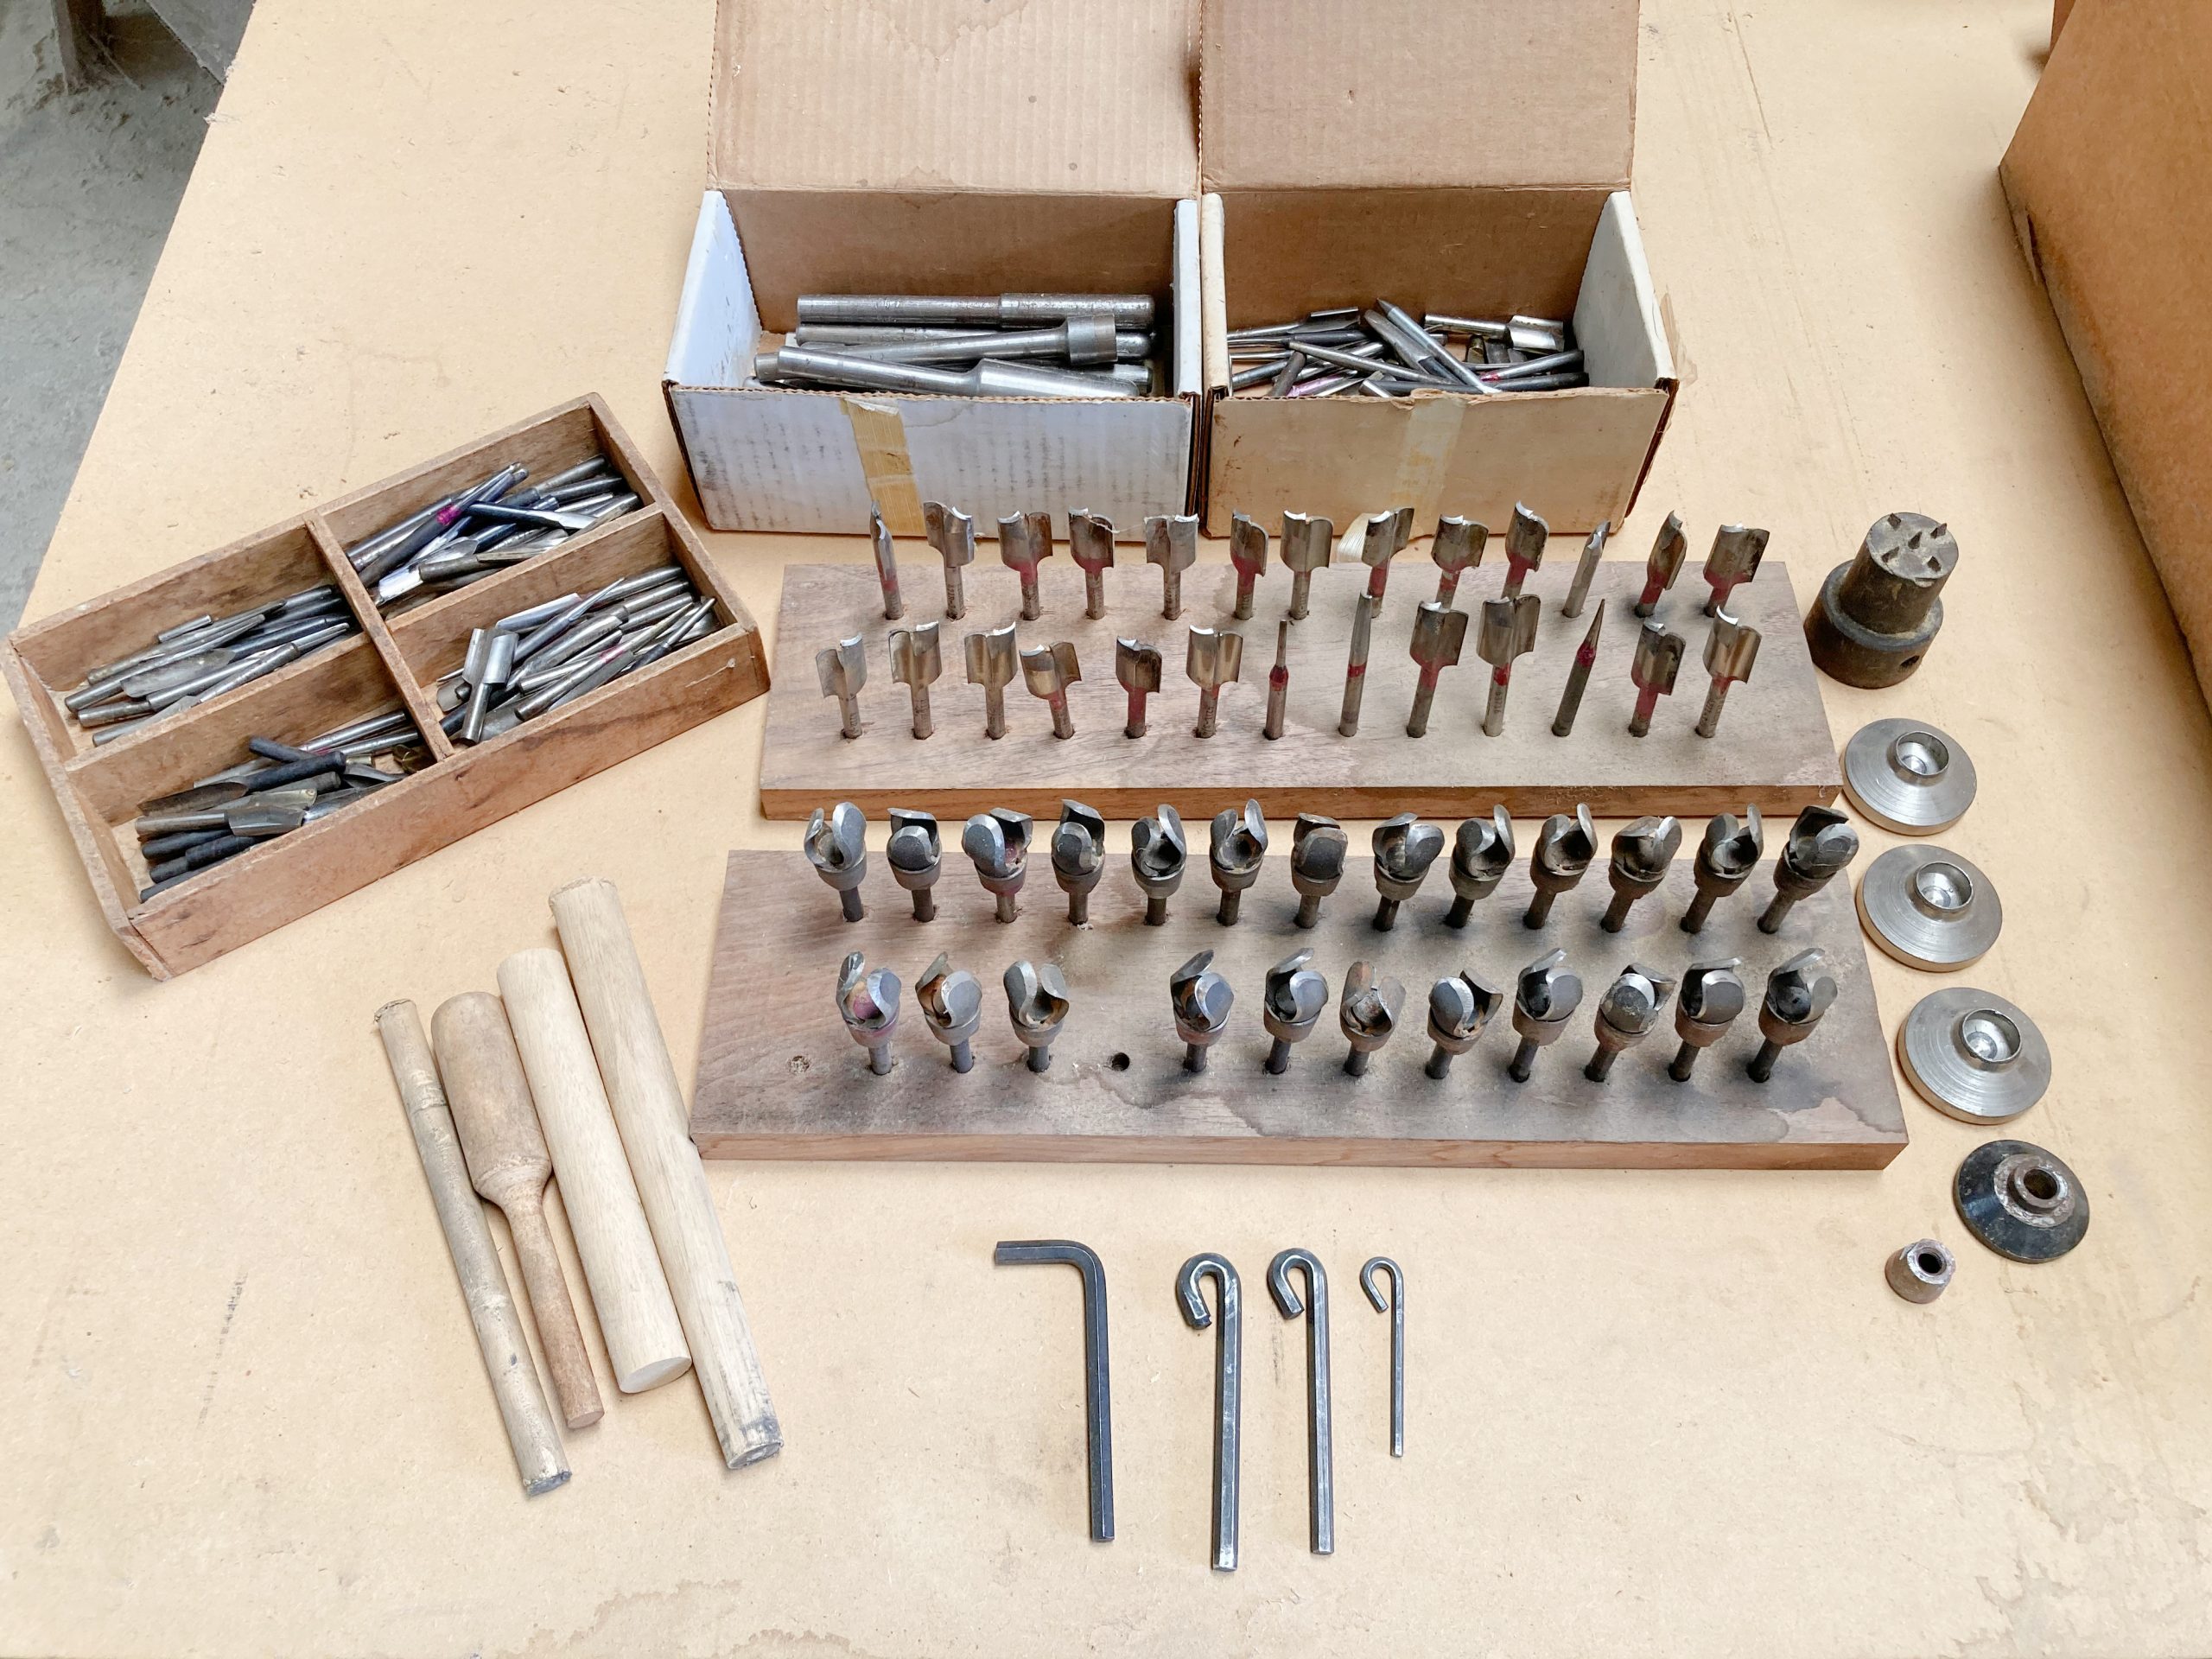 Equipment Lot: Terrco Northstar Wood Carving Machine, Zeks Dryer & Supplies (Used) Item # UE-080421A (Texas)